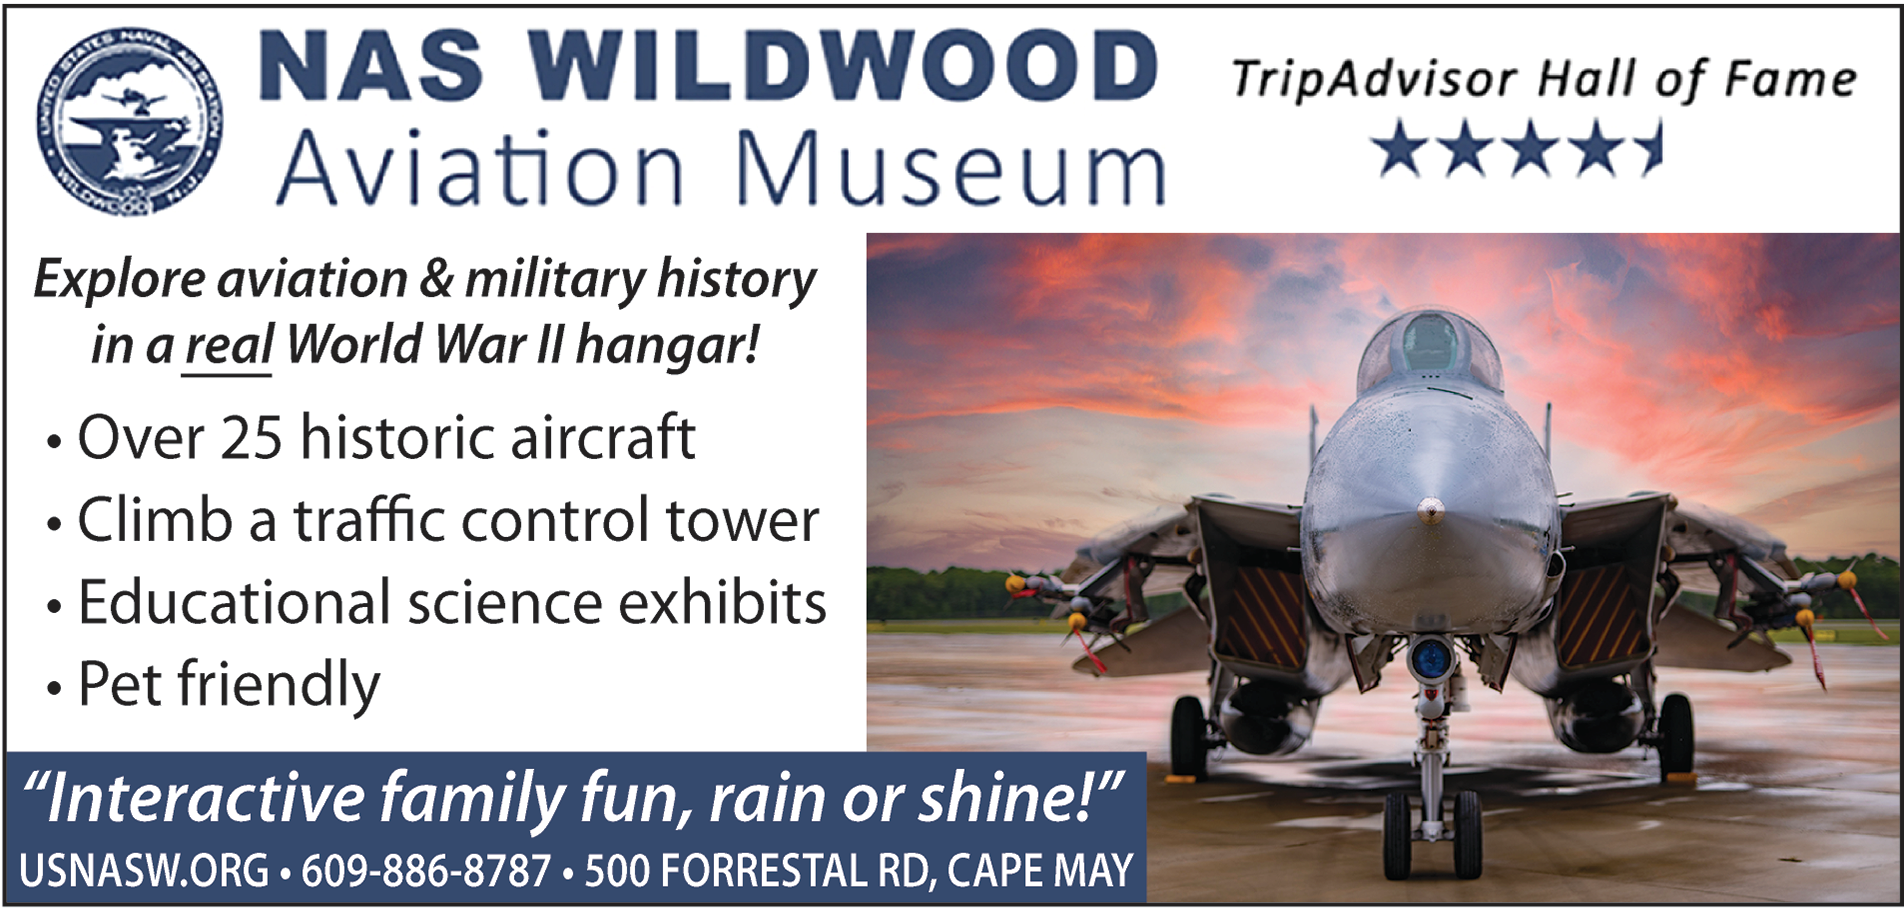 NAS Wildwood Aviation Museum Print Ad